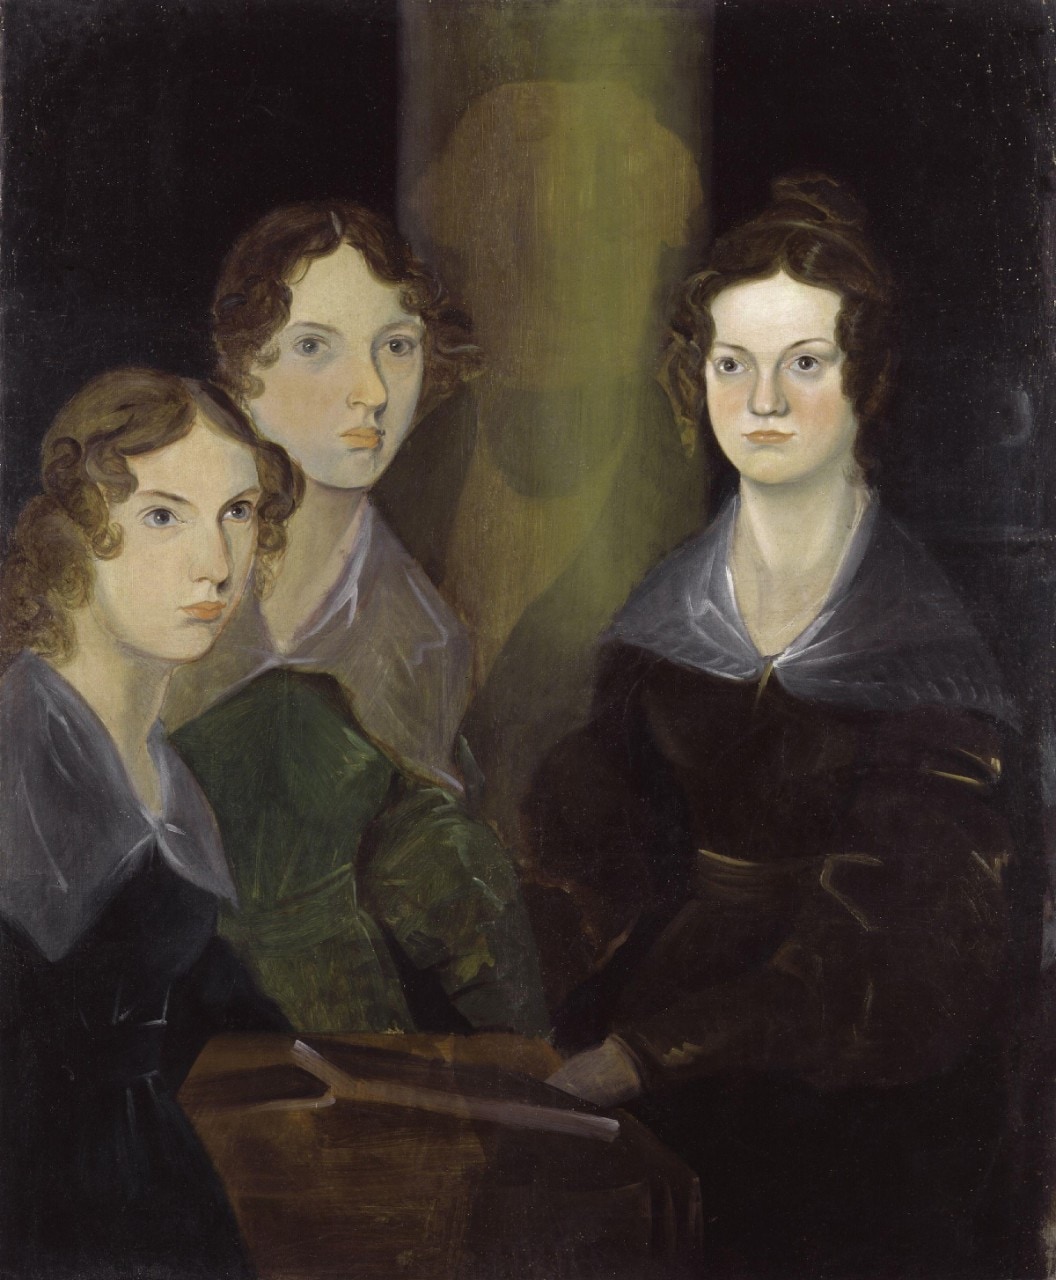 The Brontë Sisters by Patrick Branwell Brontë